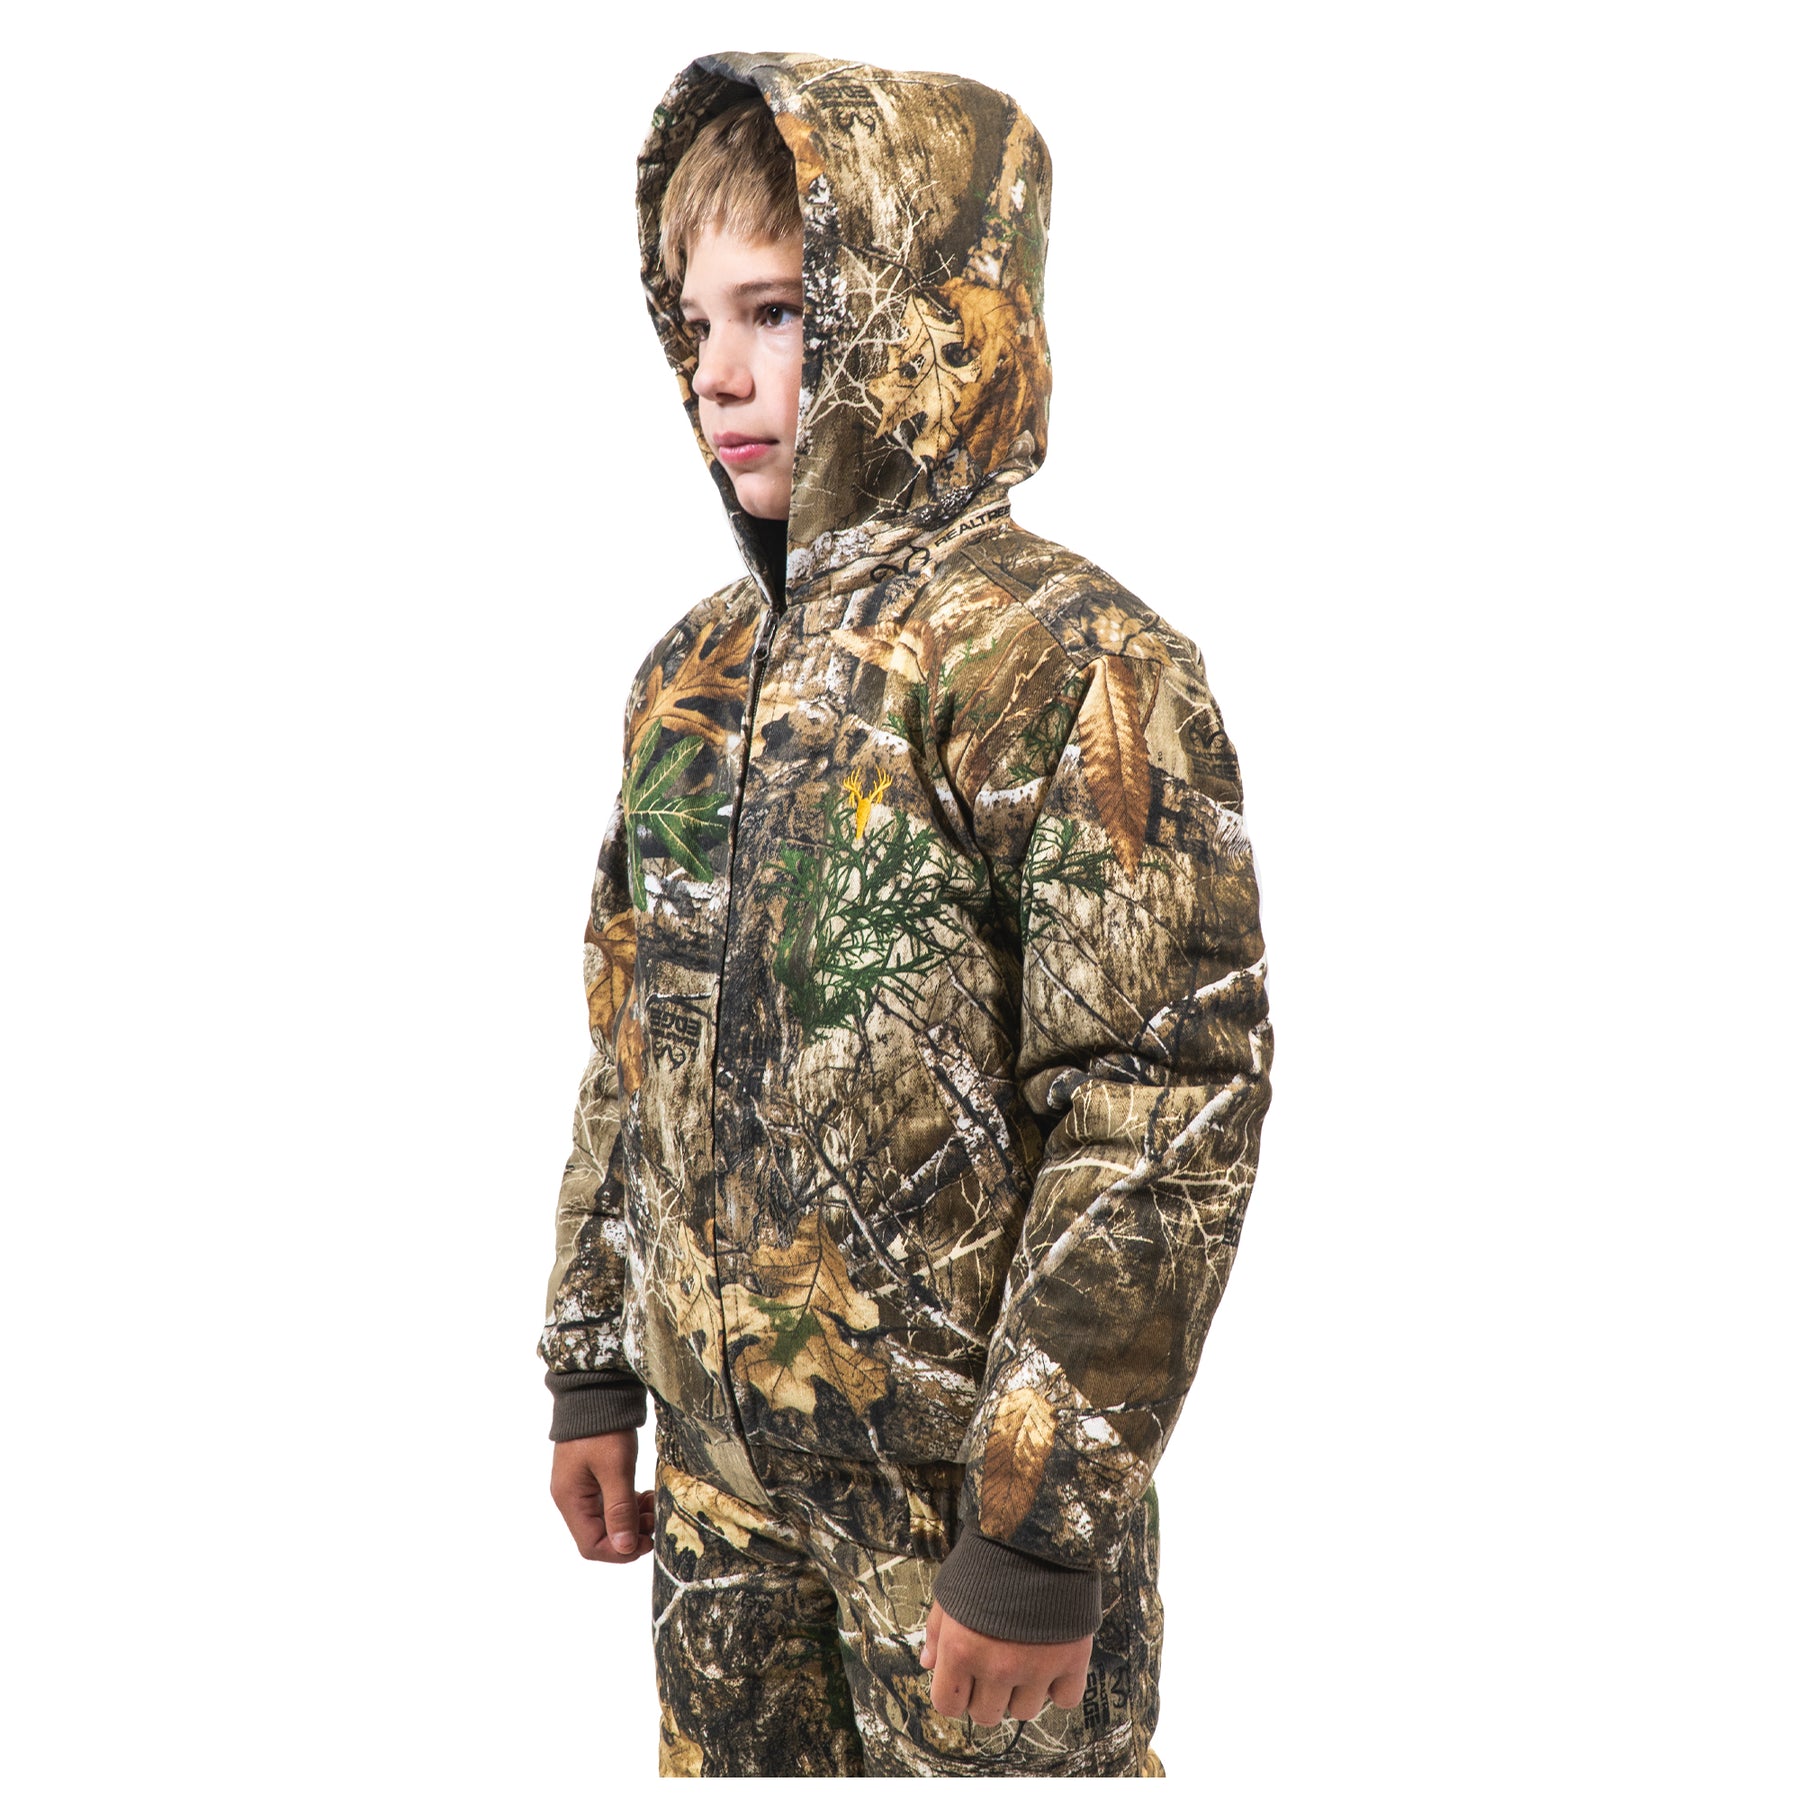 Hot Shot Youth Hunting Jacket, Boy's, Size: Small, Green